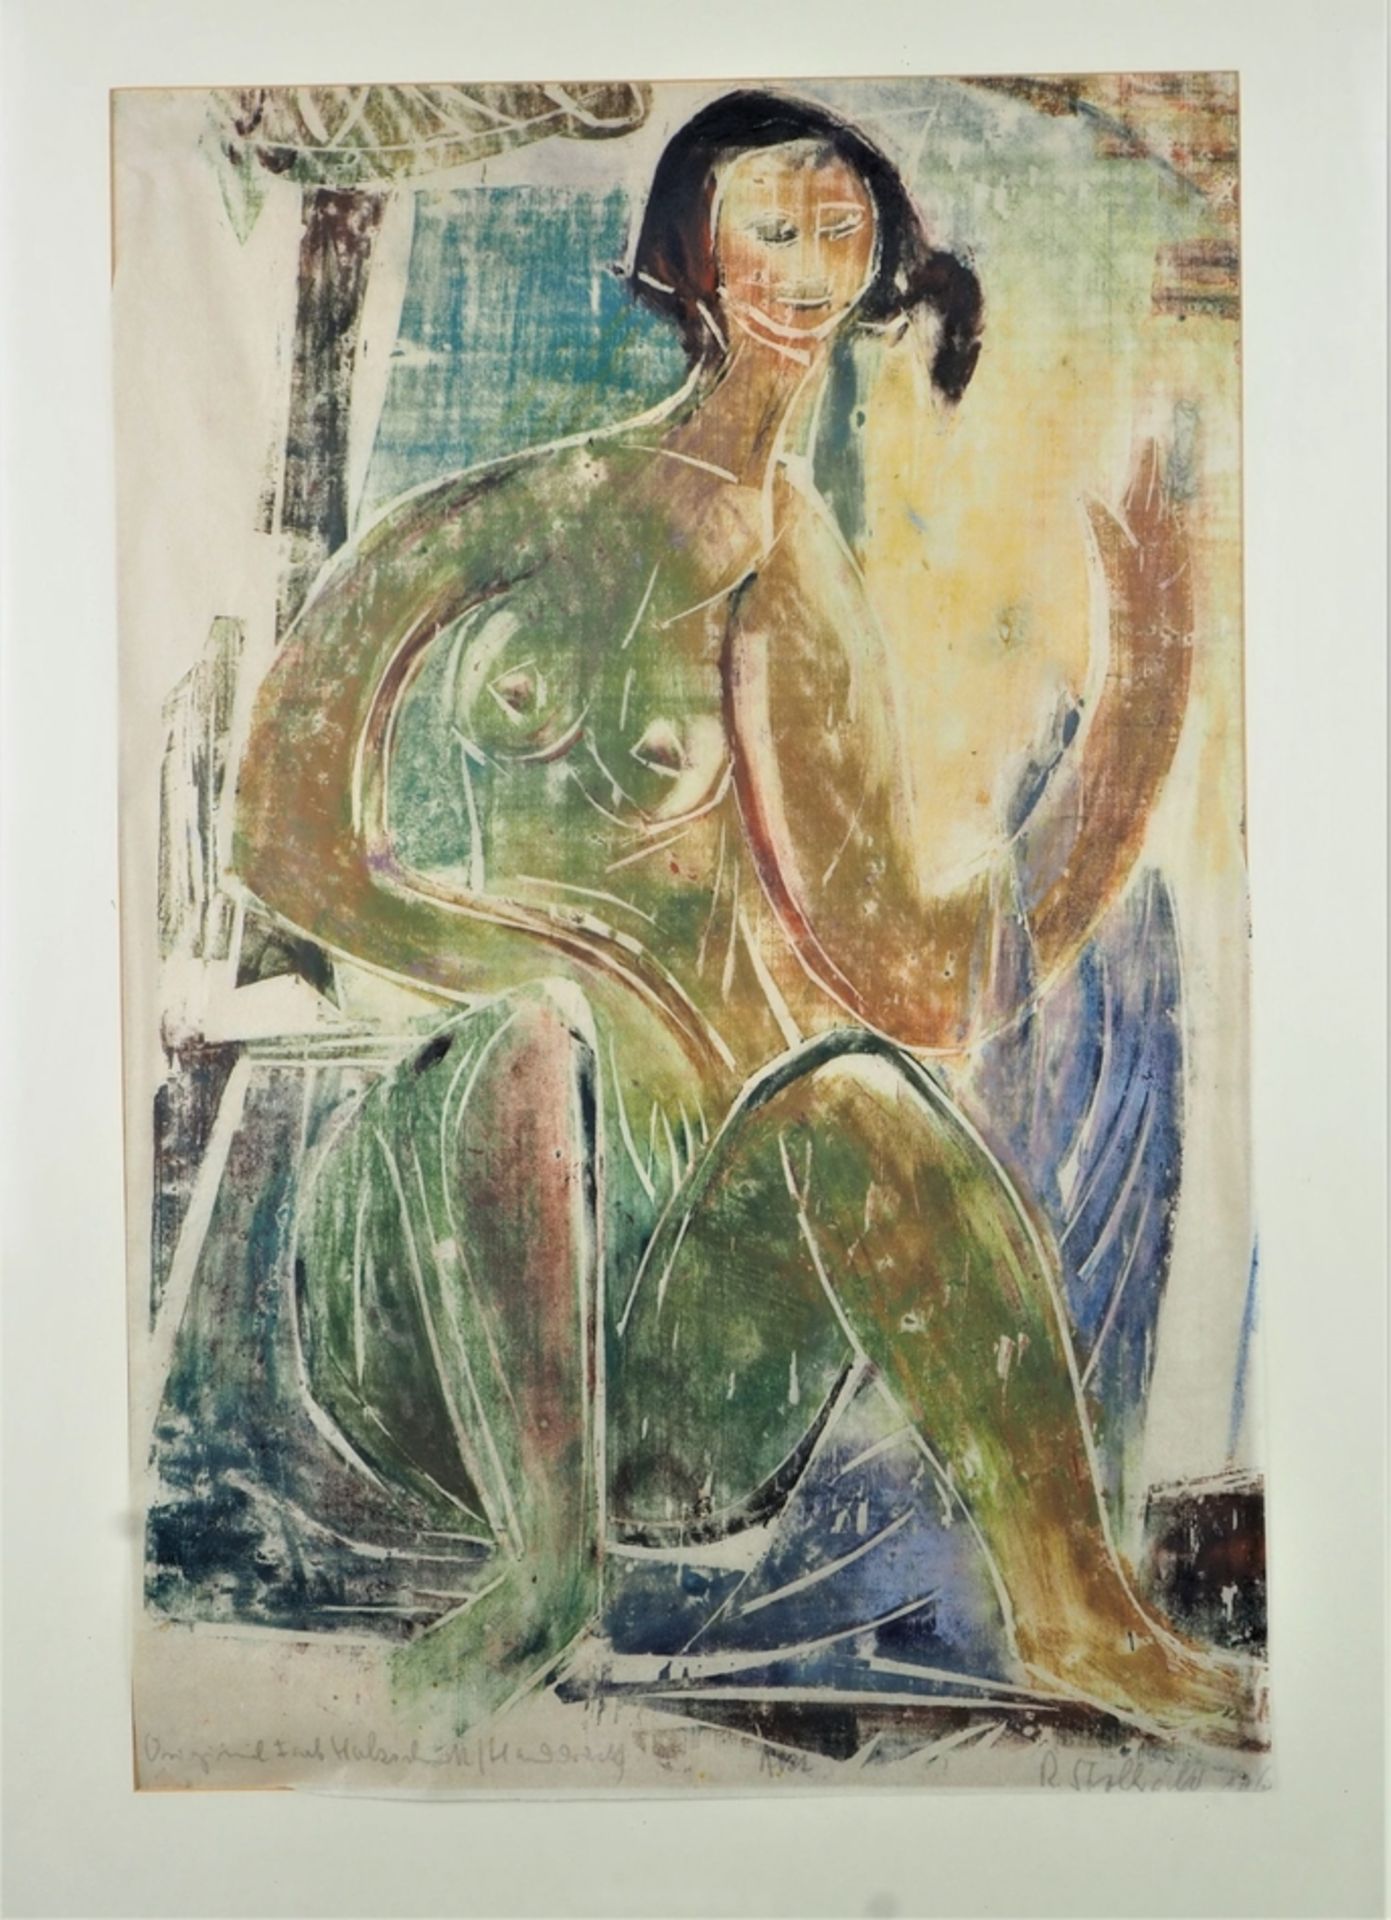 Reinhold Strohhäcker, original color woodcut/hand print "Nude", 1960s.